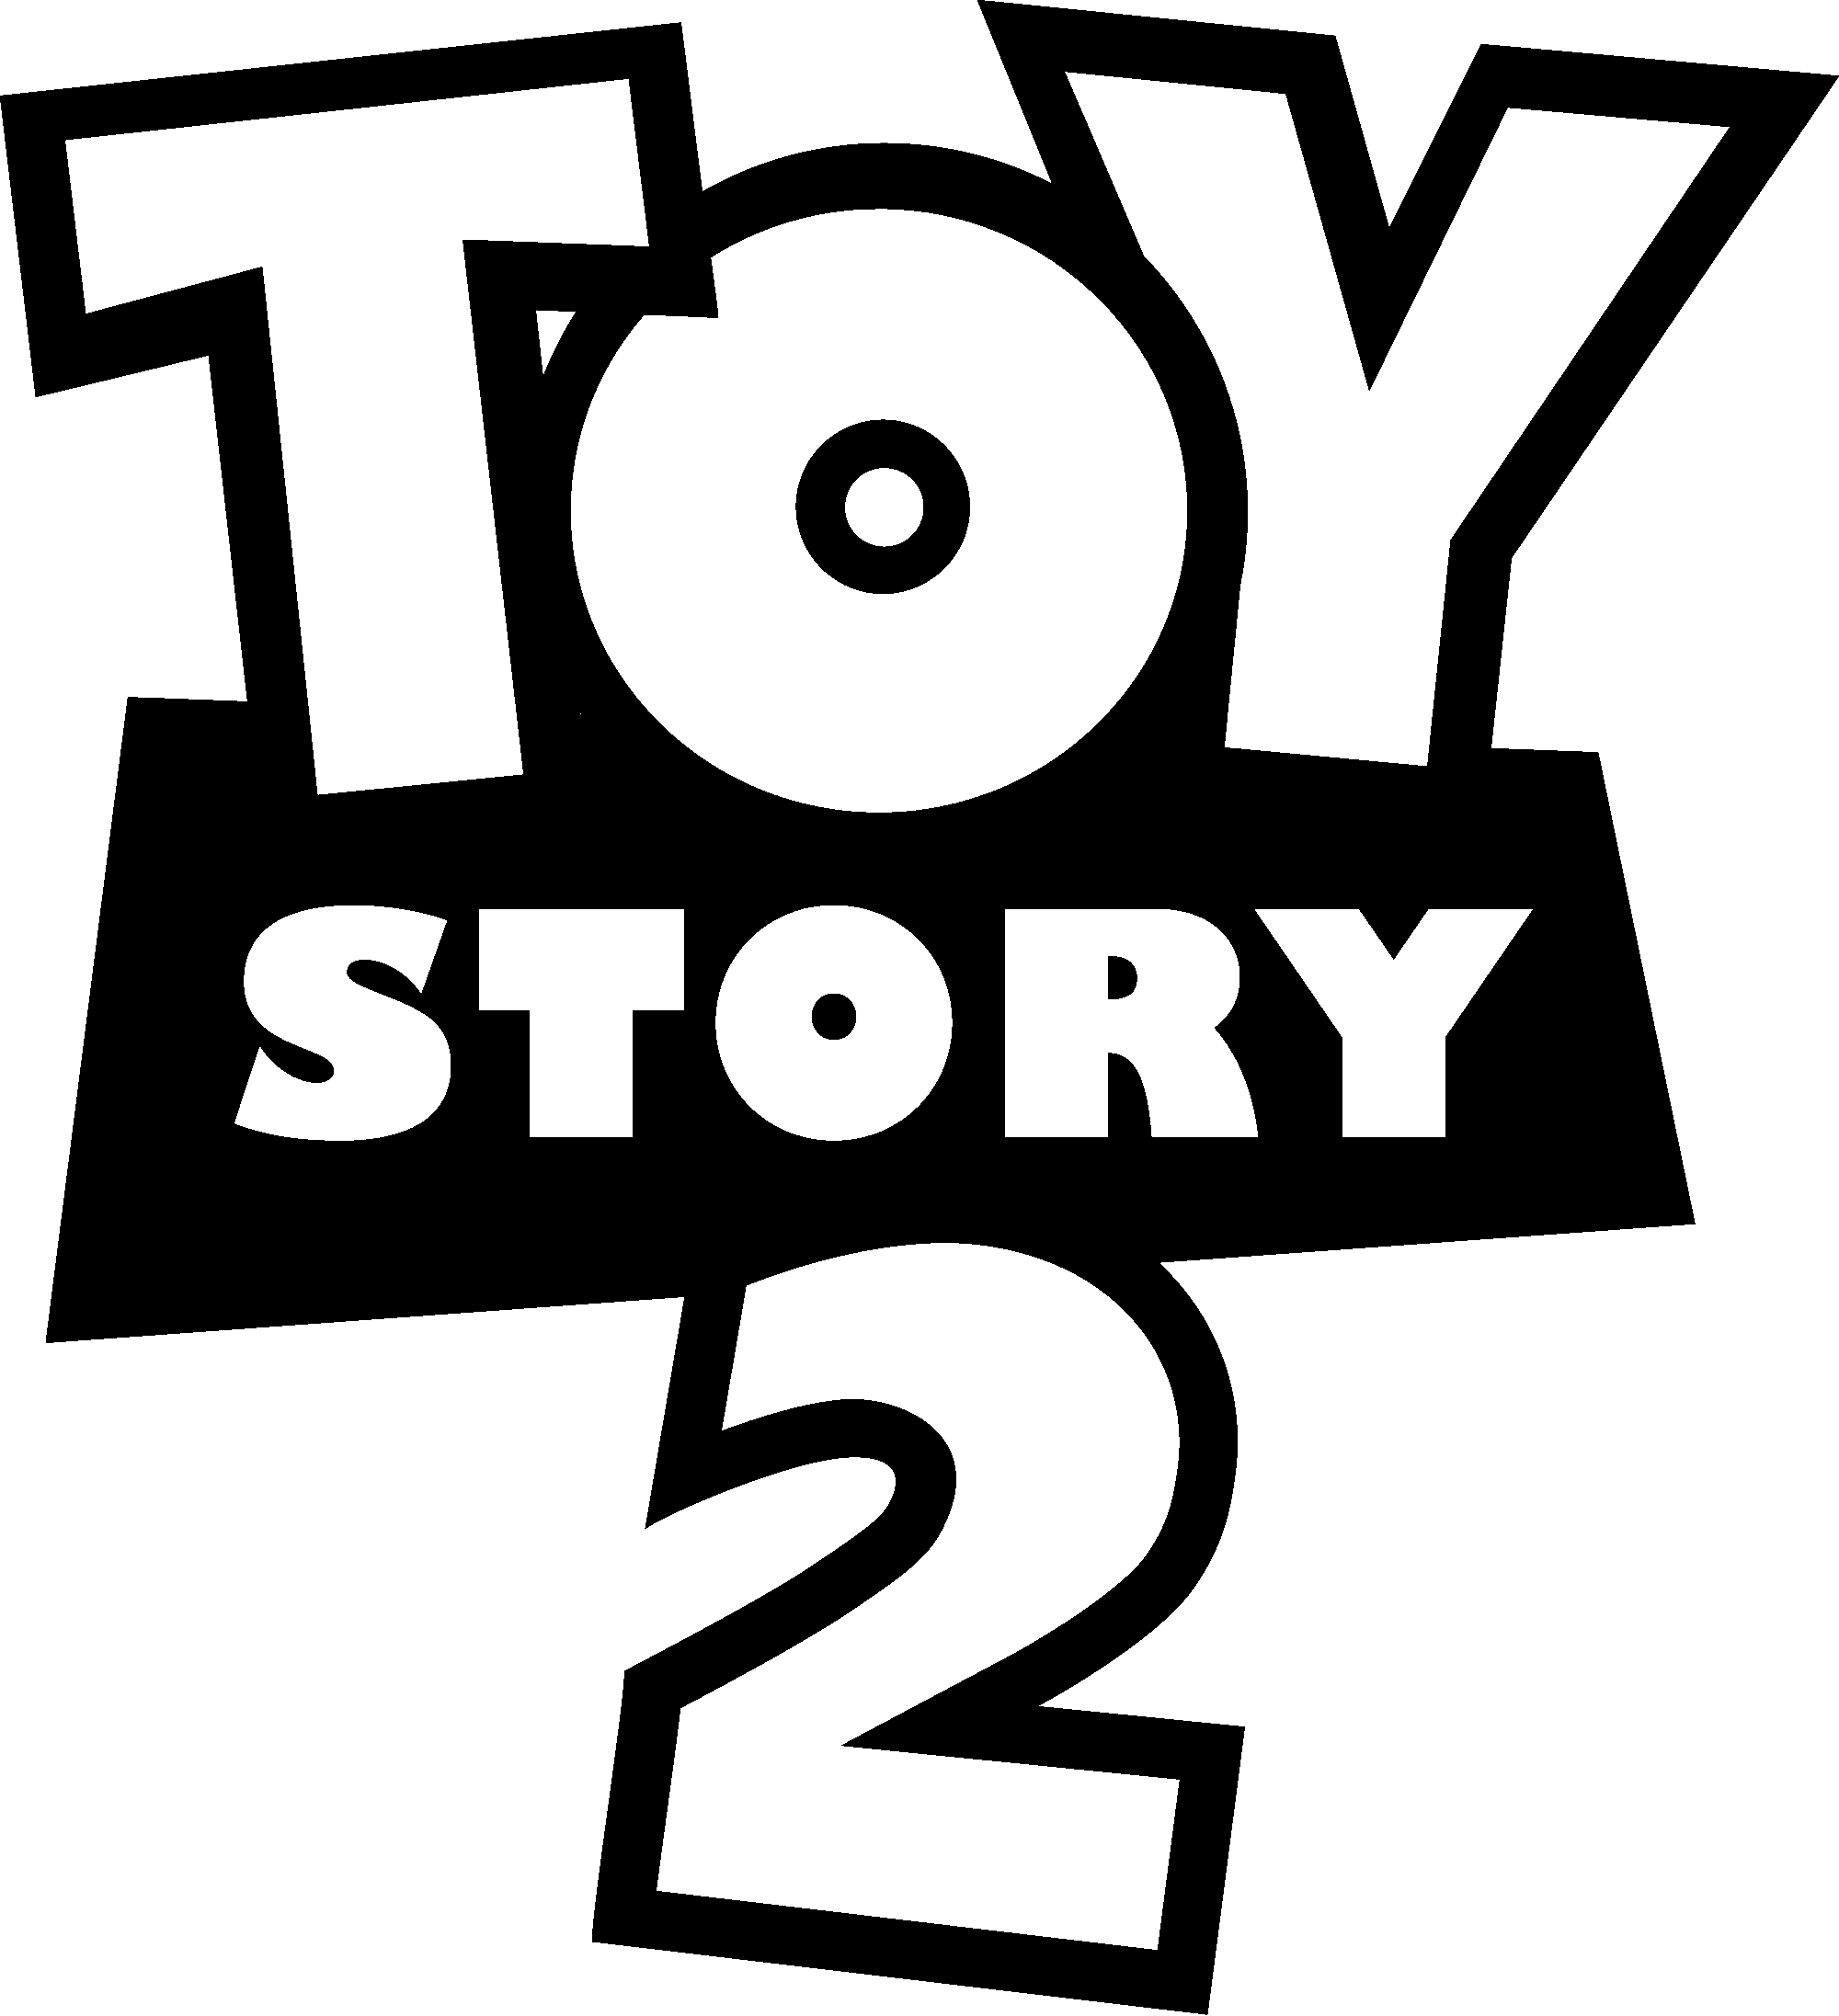 Toy Story 2 Logo - Image - Toy Story 2 (logo).png | Logopedia | FANDOM powered by Wikia